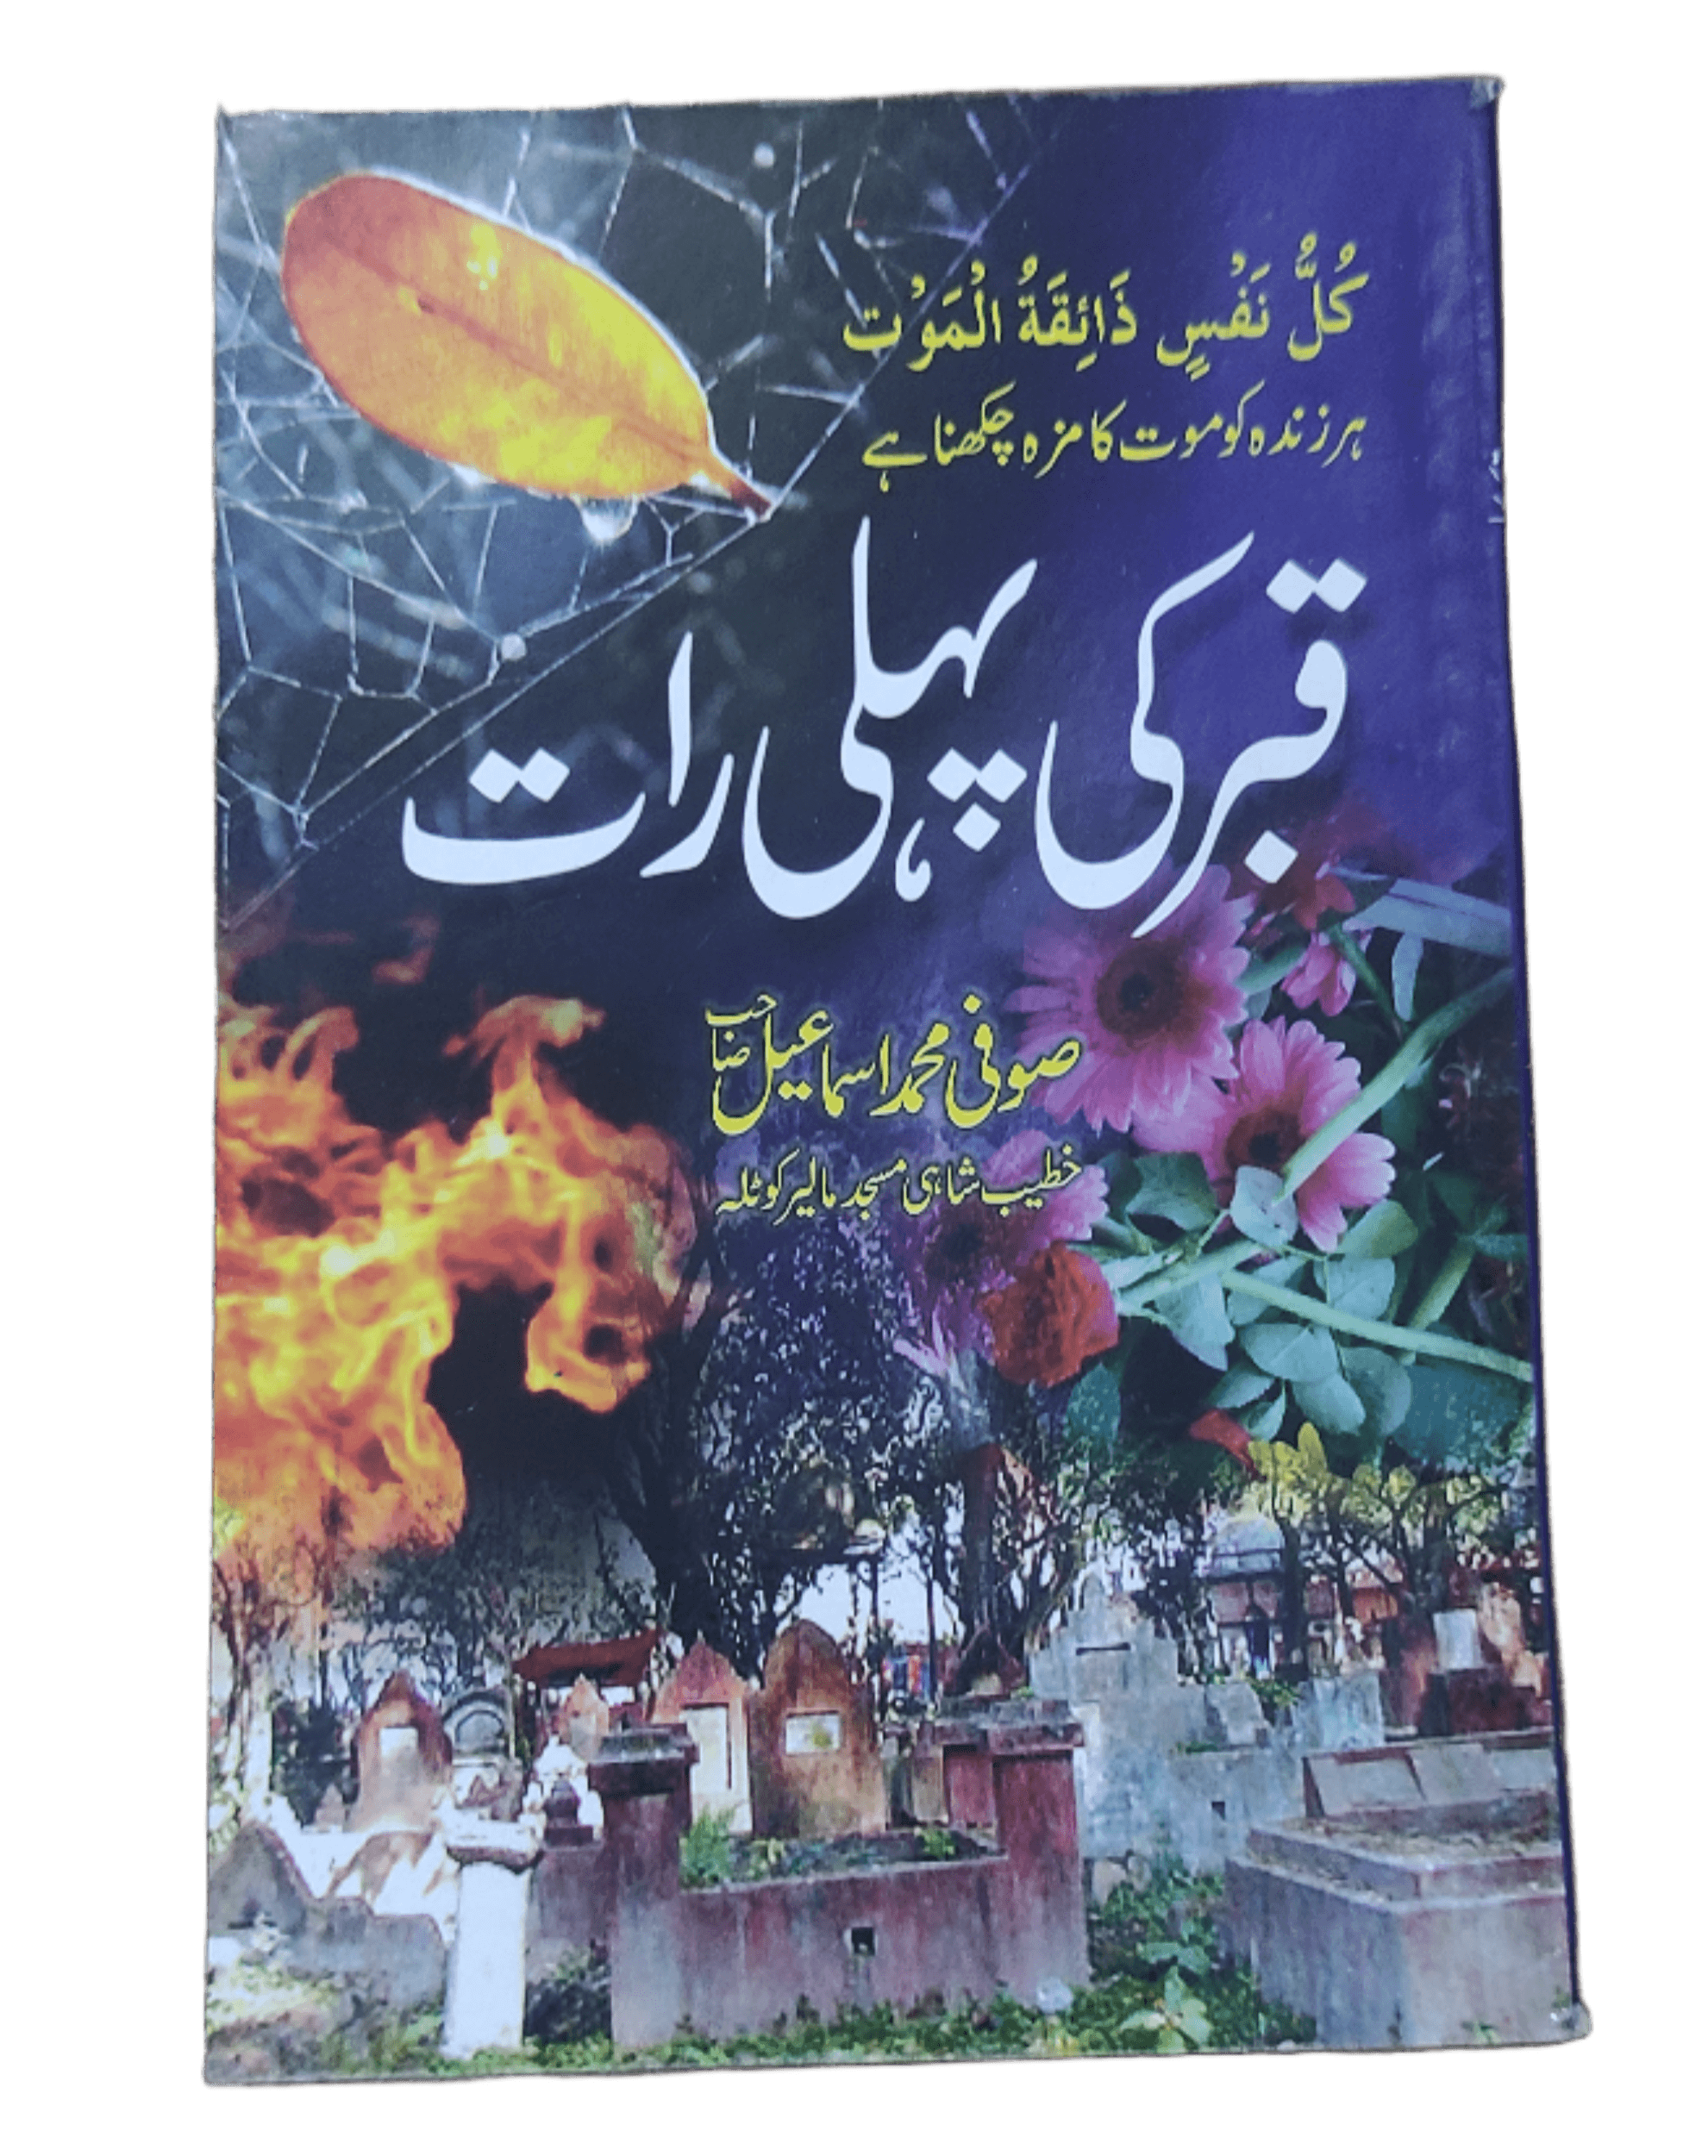 Qabar Ki Pehli Raat (First Night of Grave) - KHAJISTAN™